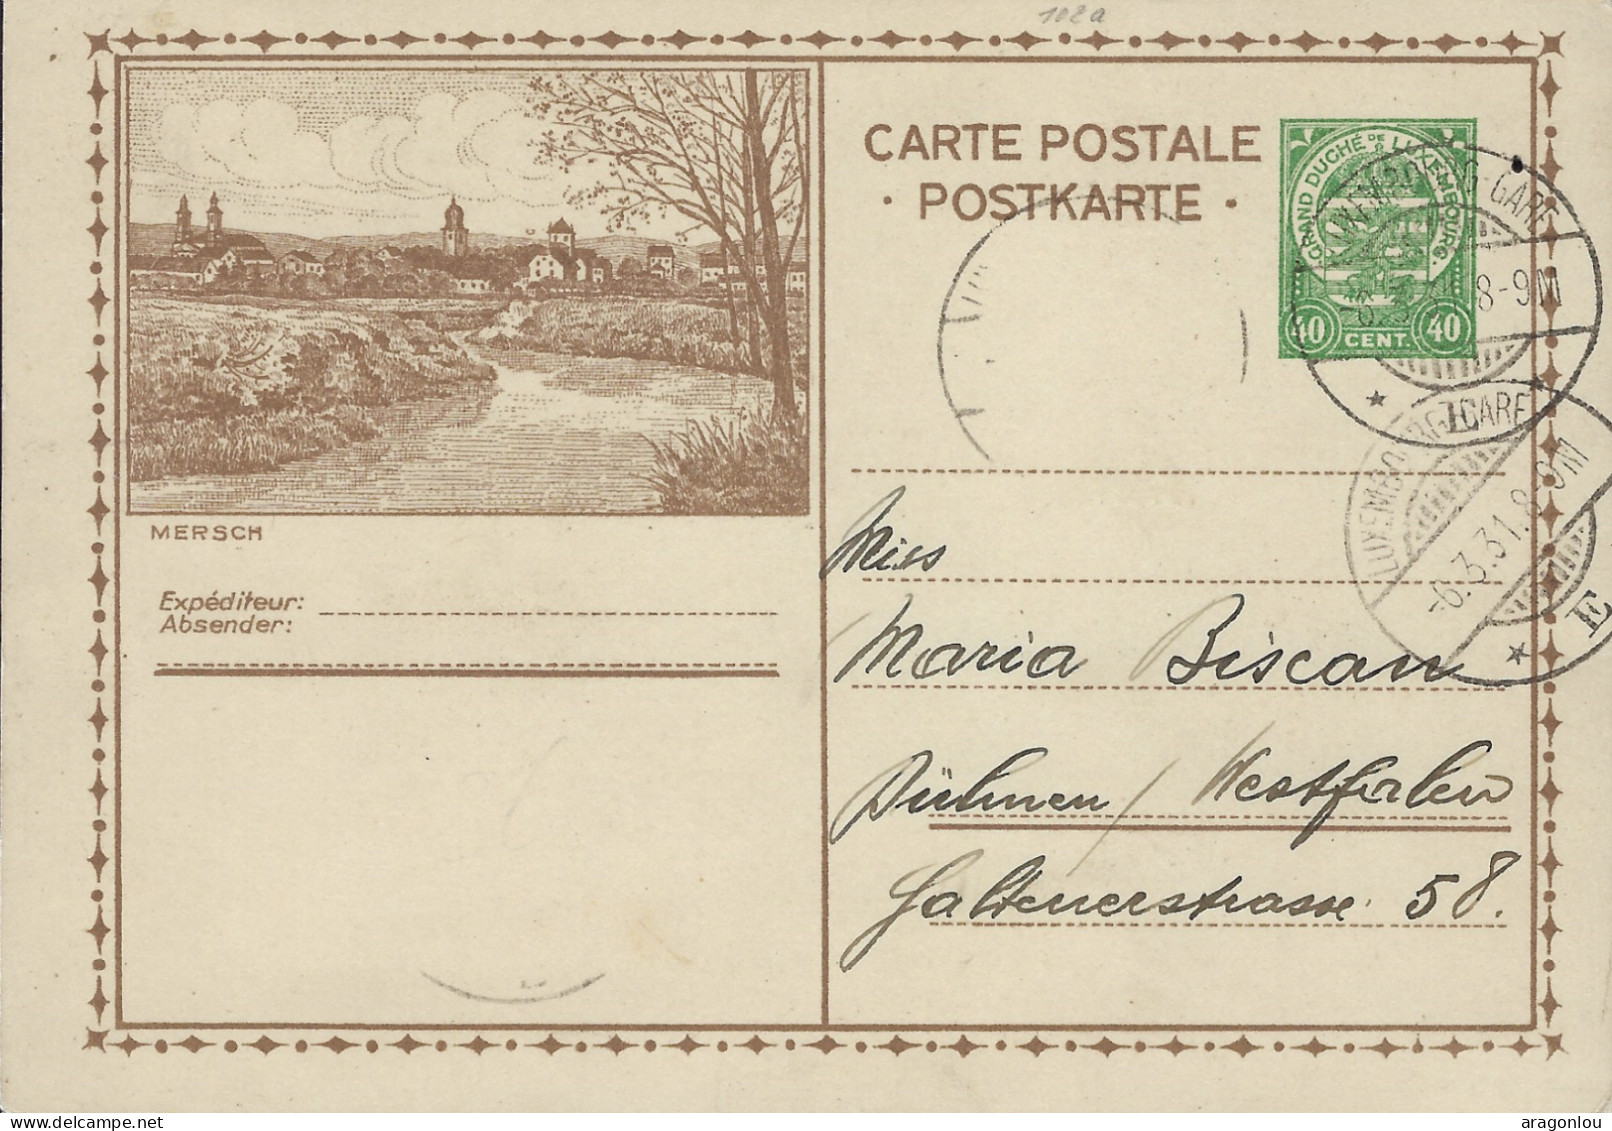 Luxembourg - Luxemburg - Carte-Postale  1931  -  Mersch -   Cachet  Luxembourg - Entiers Postaux